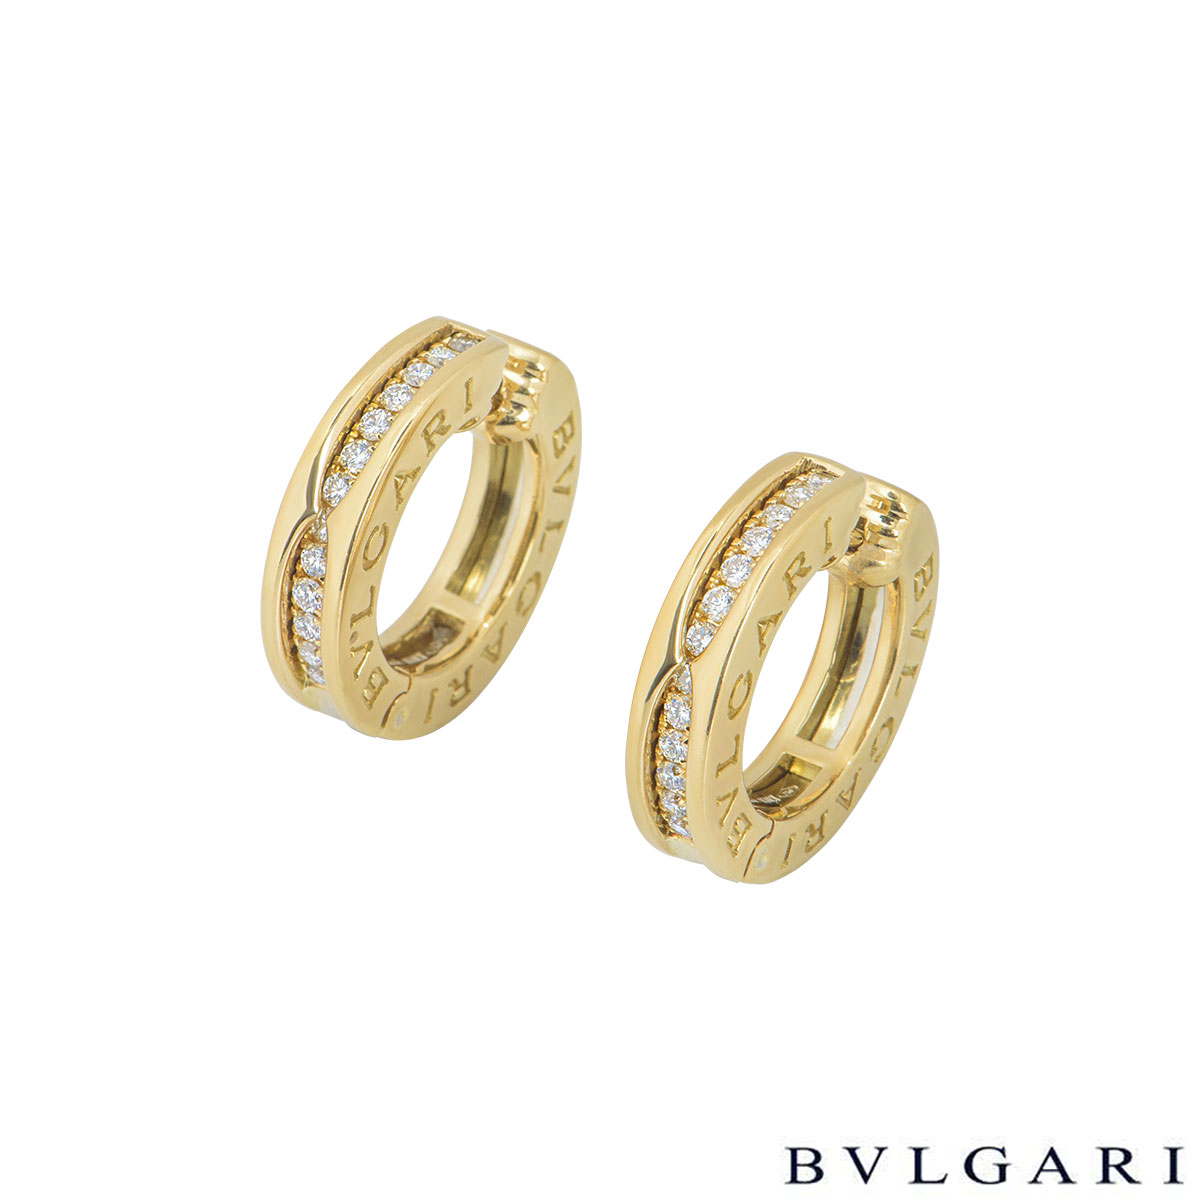 bvlgari earrings gold